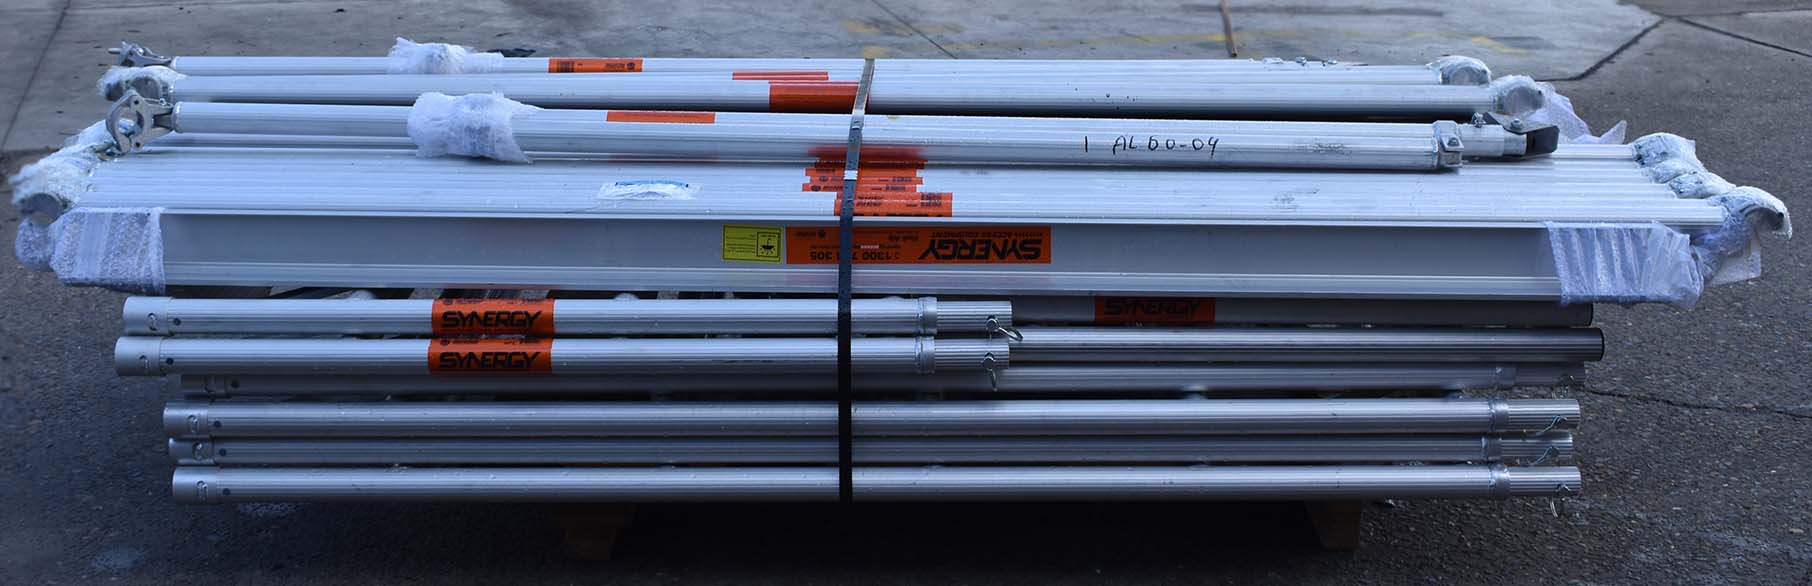 Aluminium Mobile Wide Scaffold 1.8m - 2.2m (Platform Height)